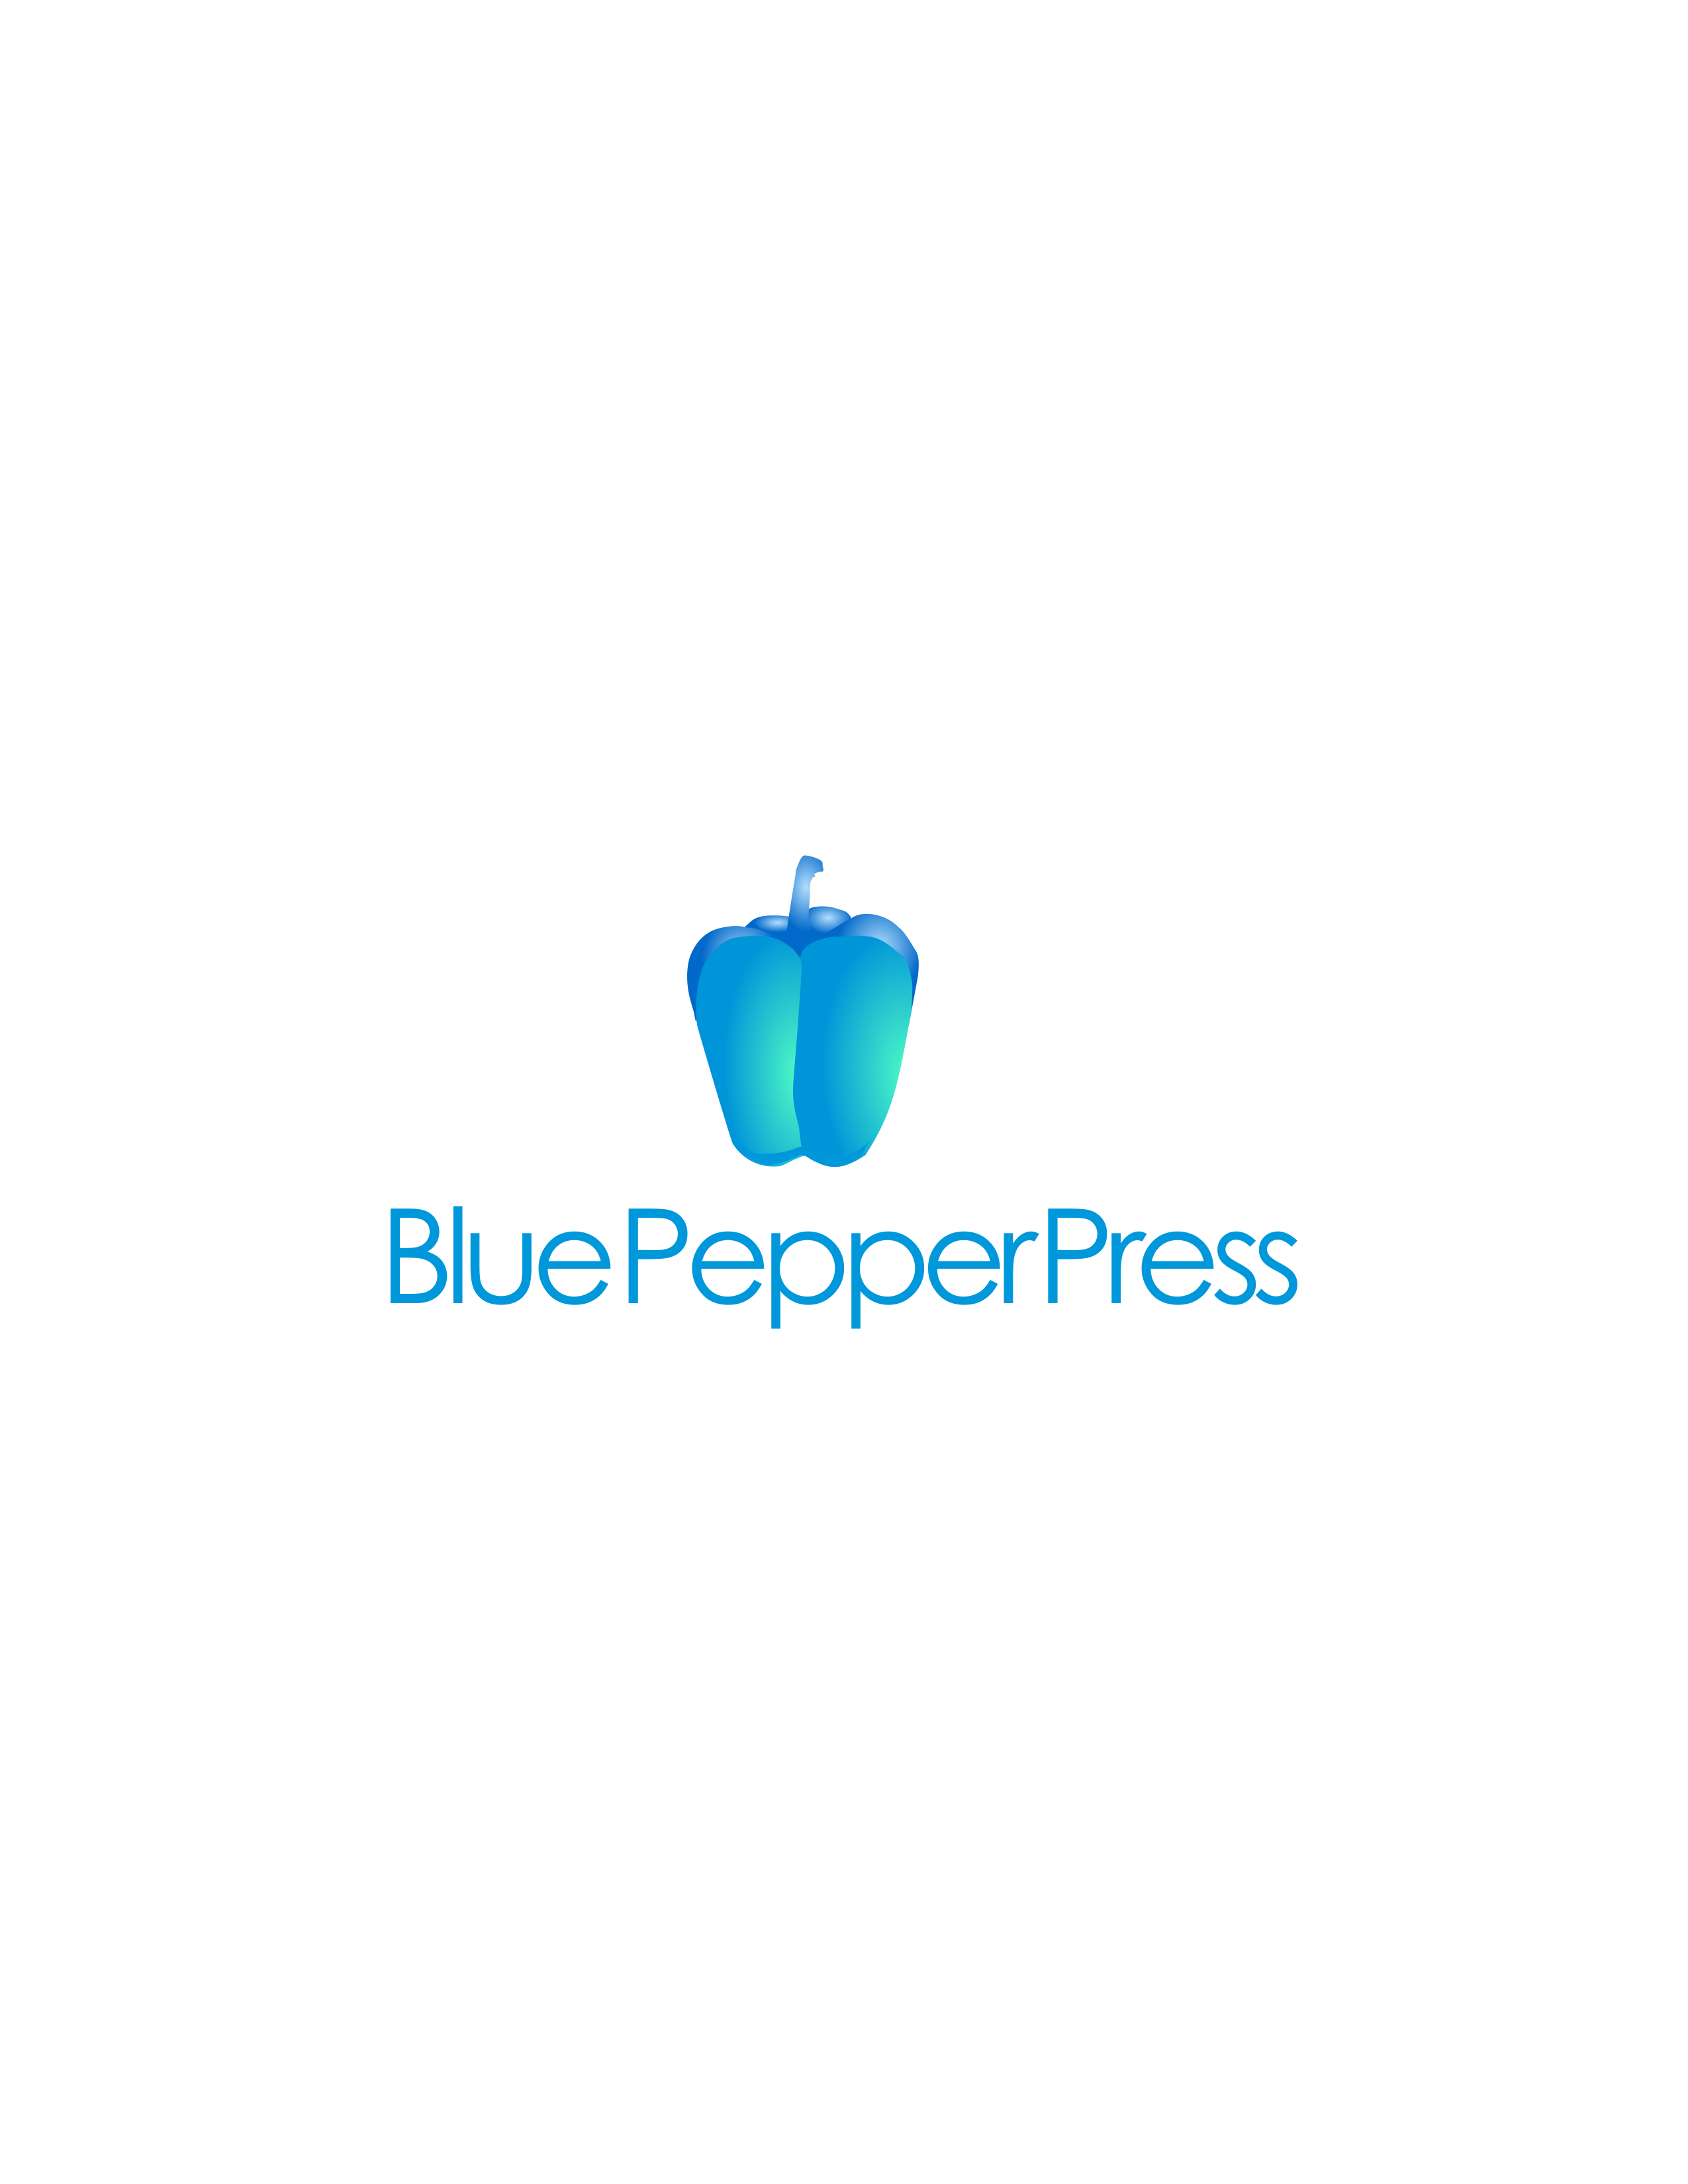 bluepepperpress.png